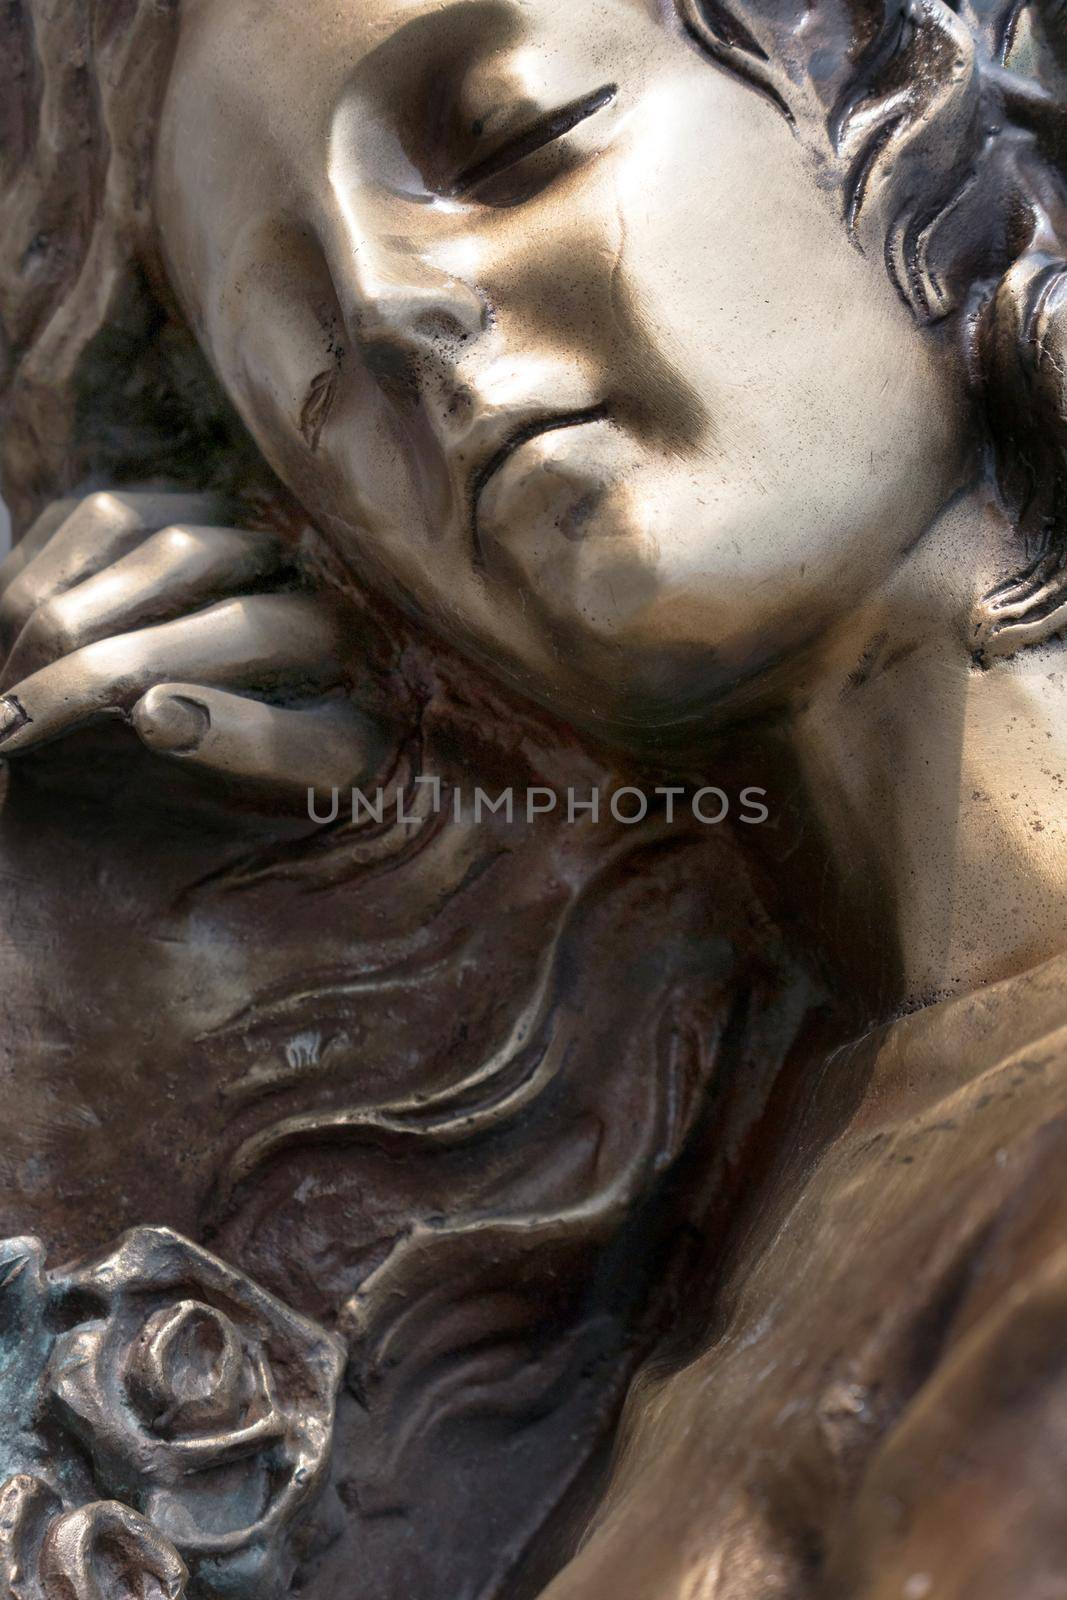 Vintage sculpture of sad woman in grief. Virgin Mary bronze statue. Religion, faith, suffering, death concept.